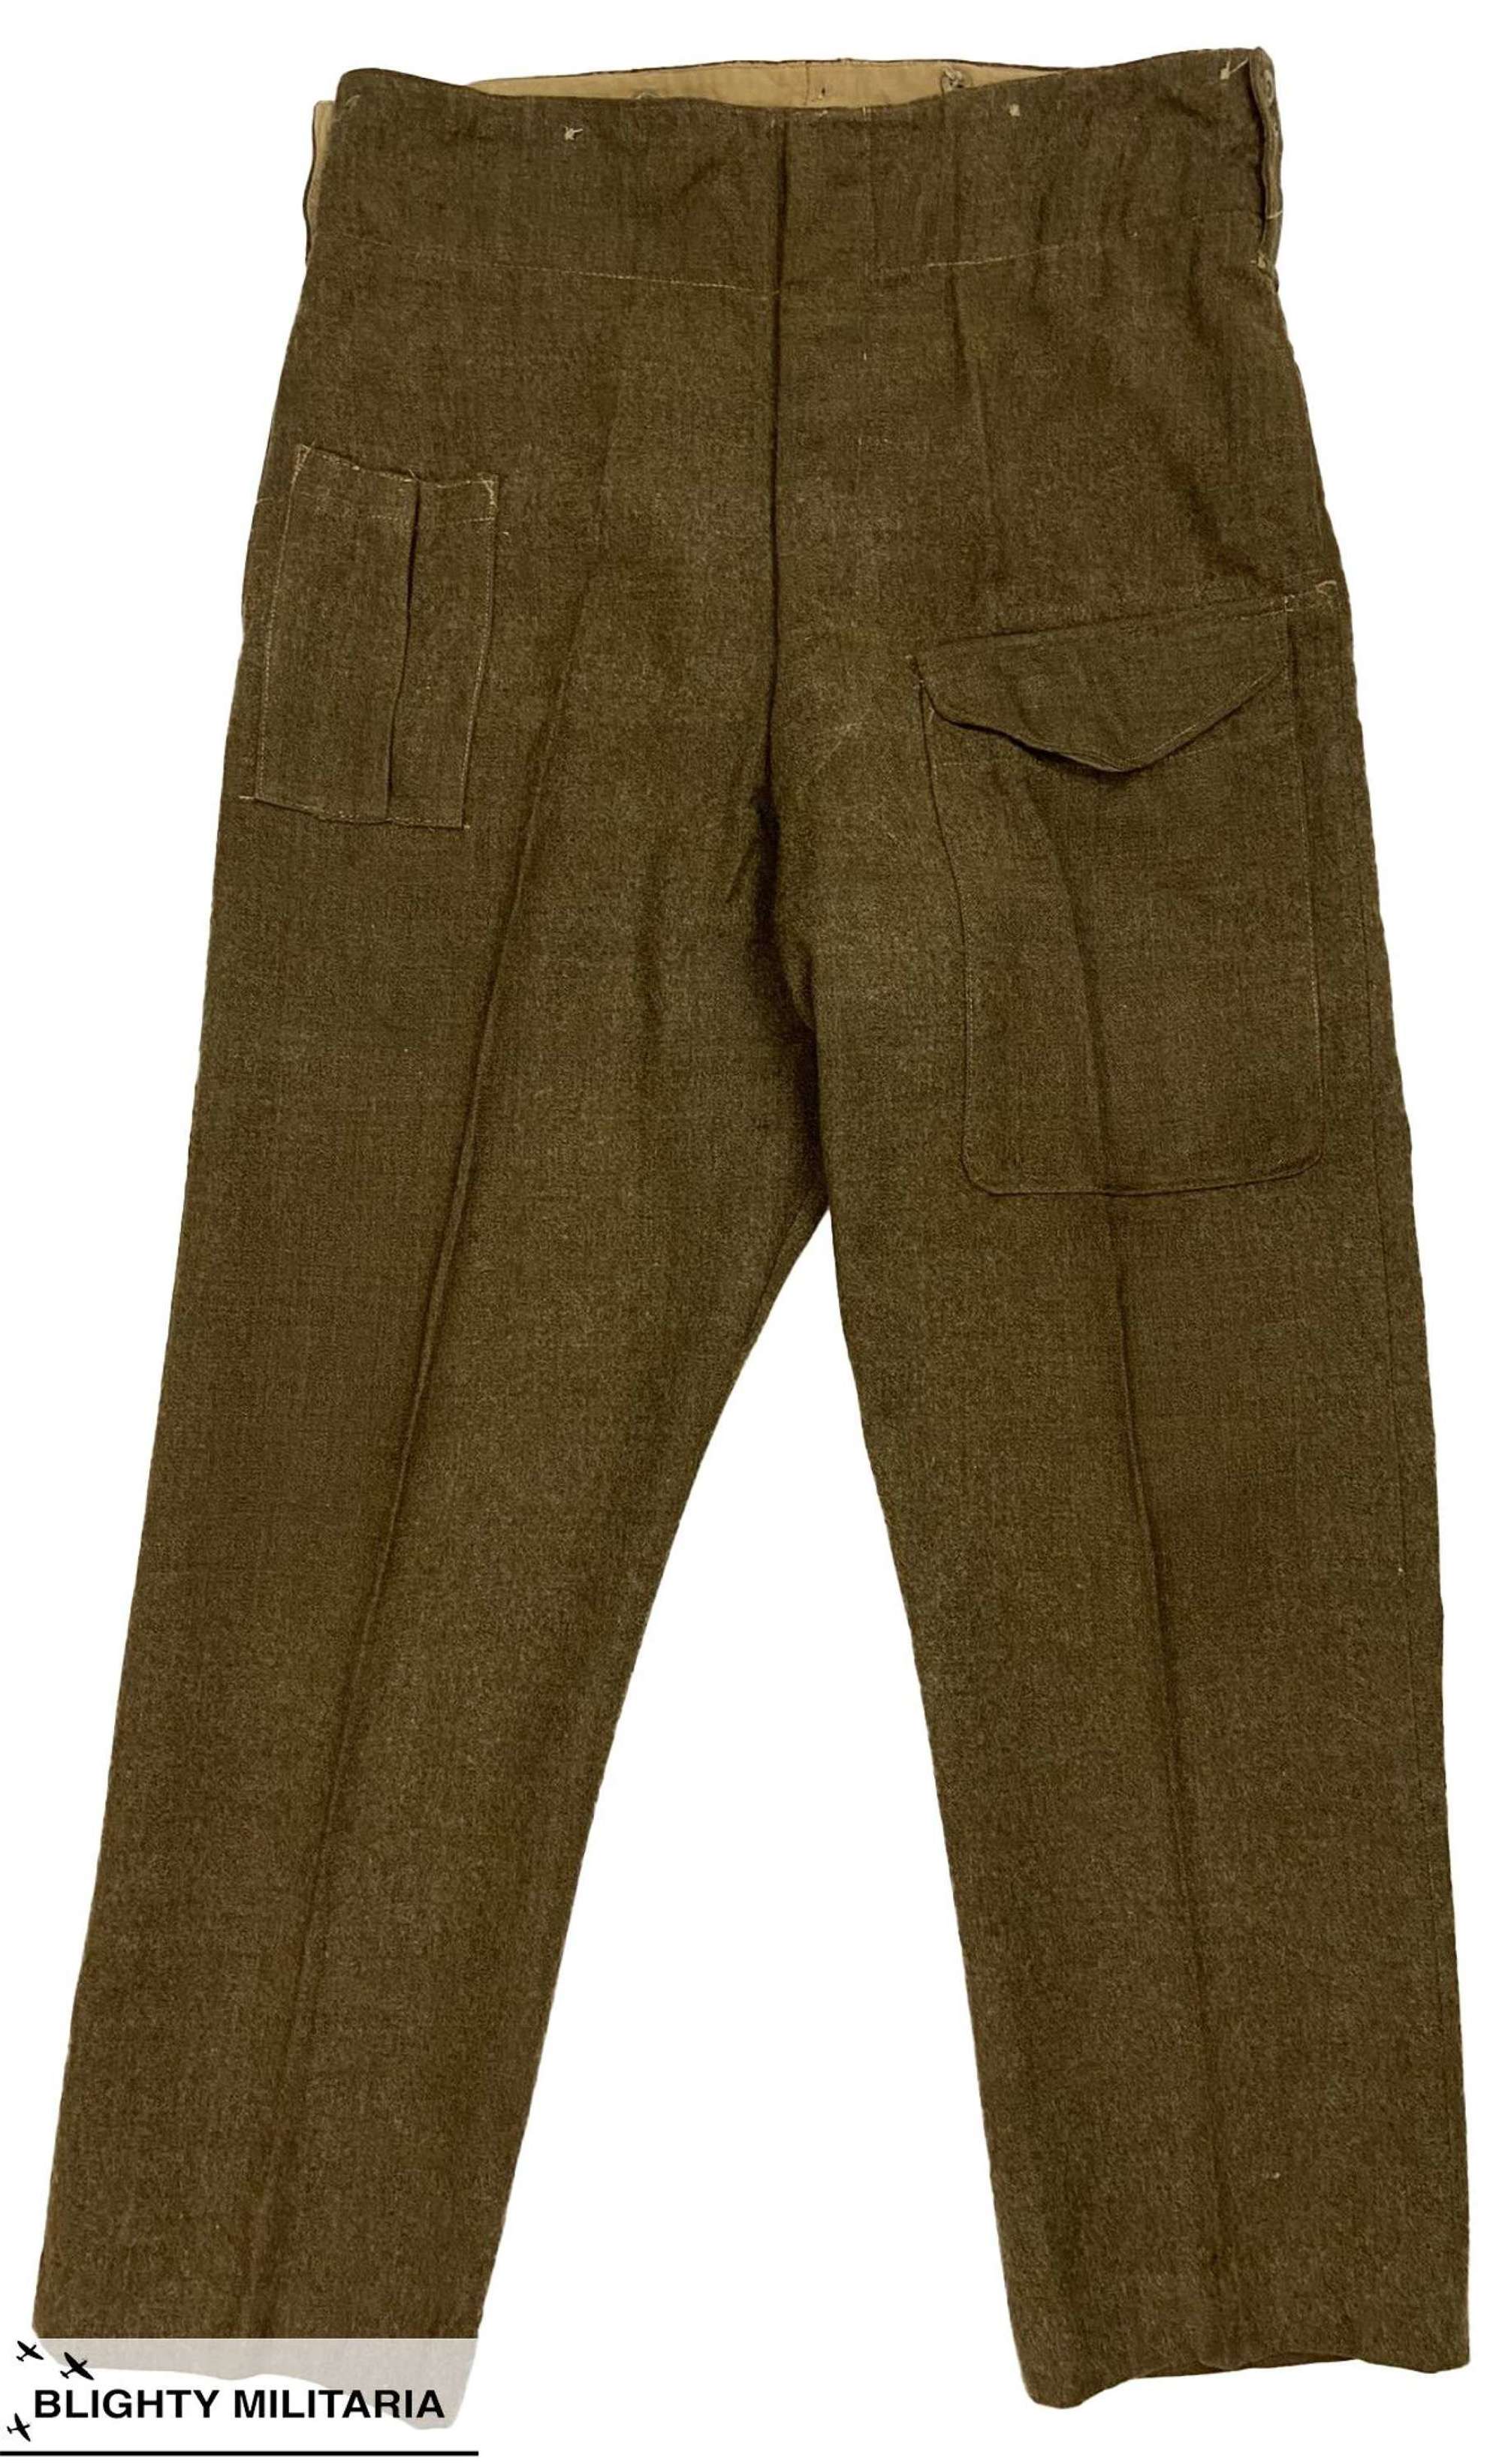 Scarce Original Early WW2 British Army Battledress Serge Trousers